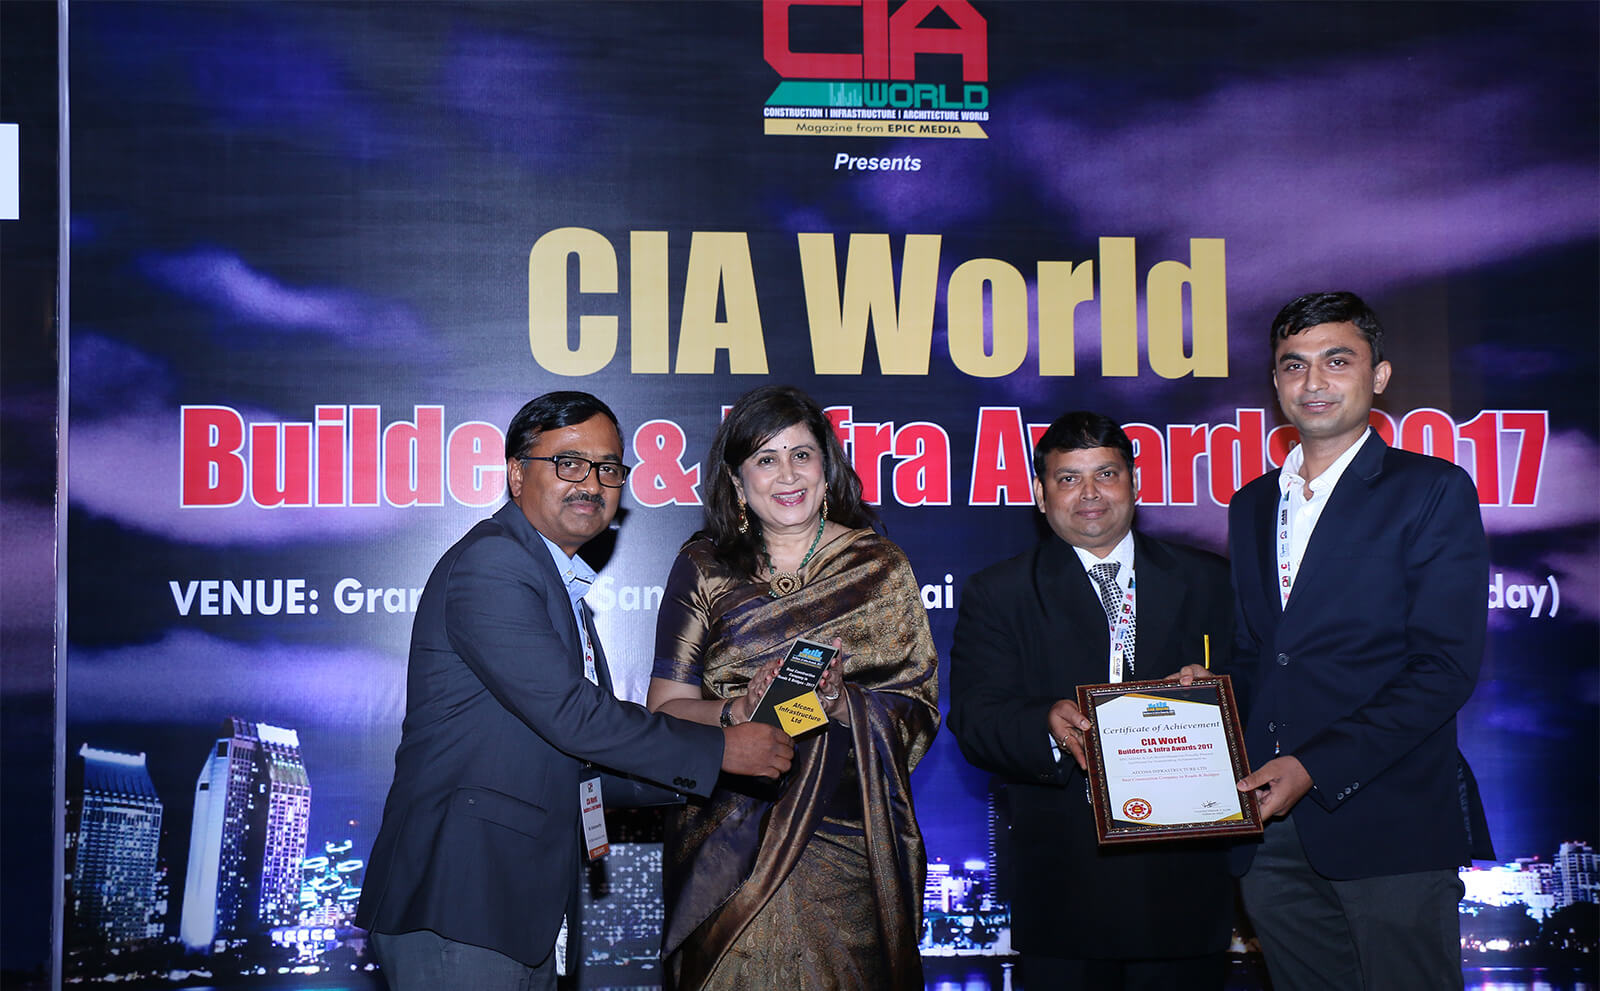 Premios CIA World Builders &amp; Infra 2017